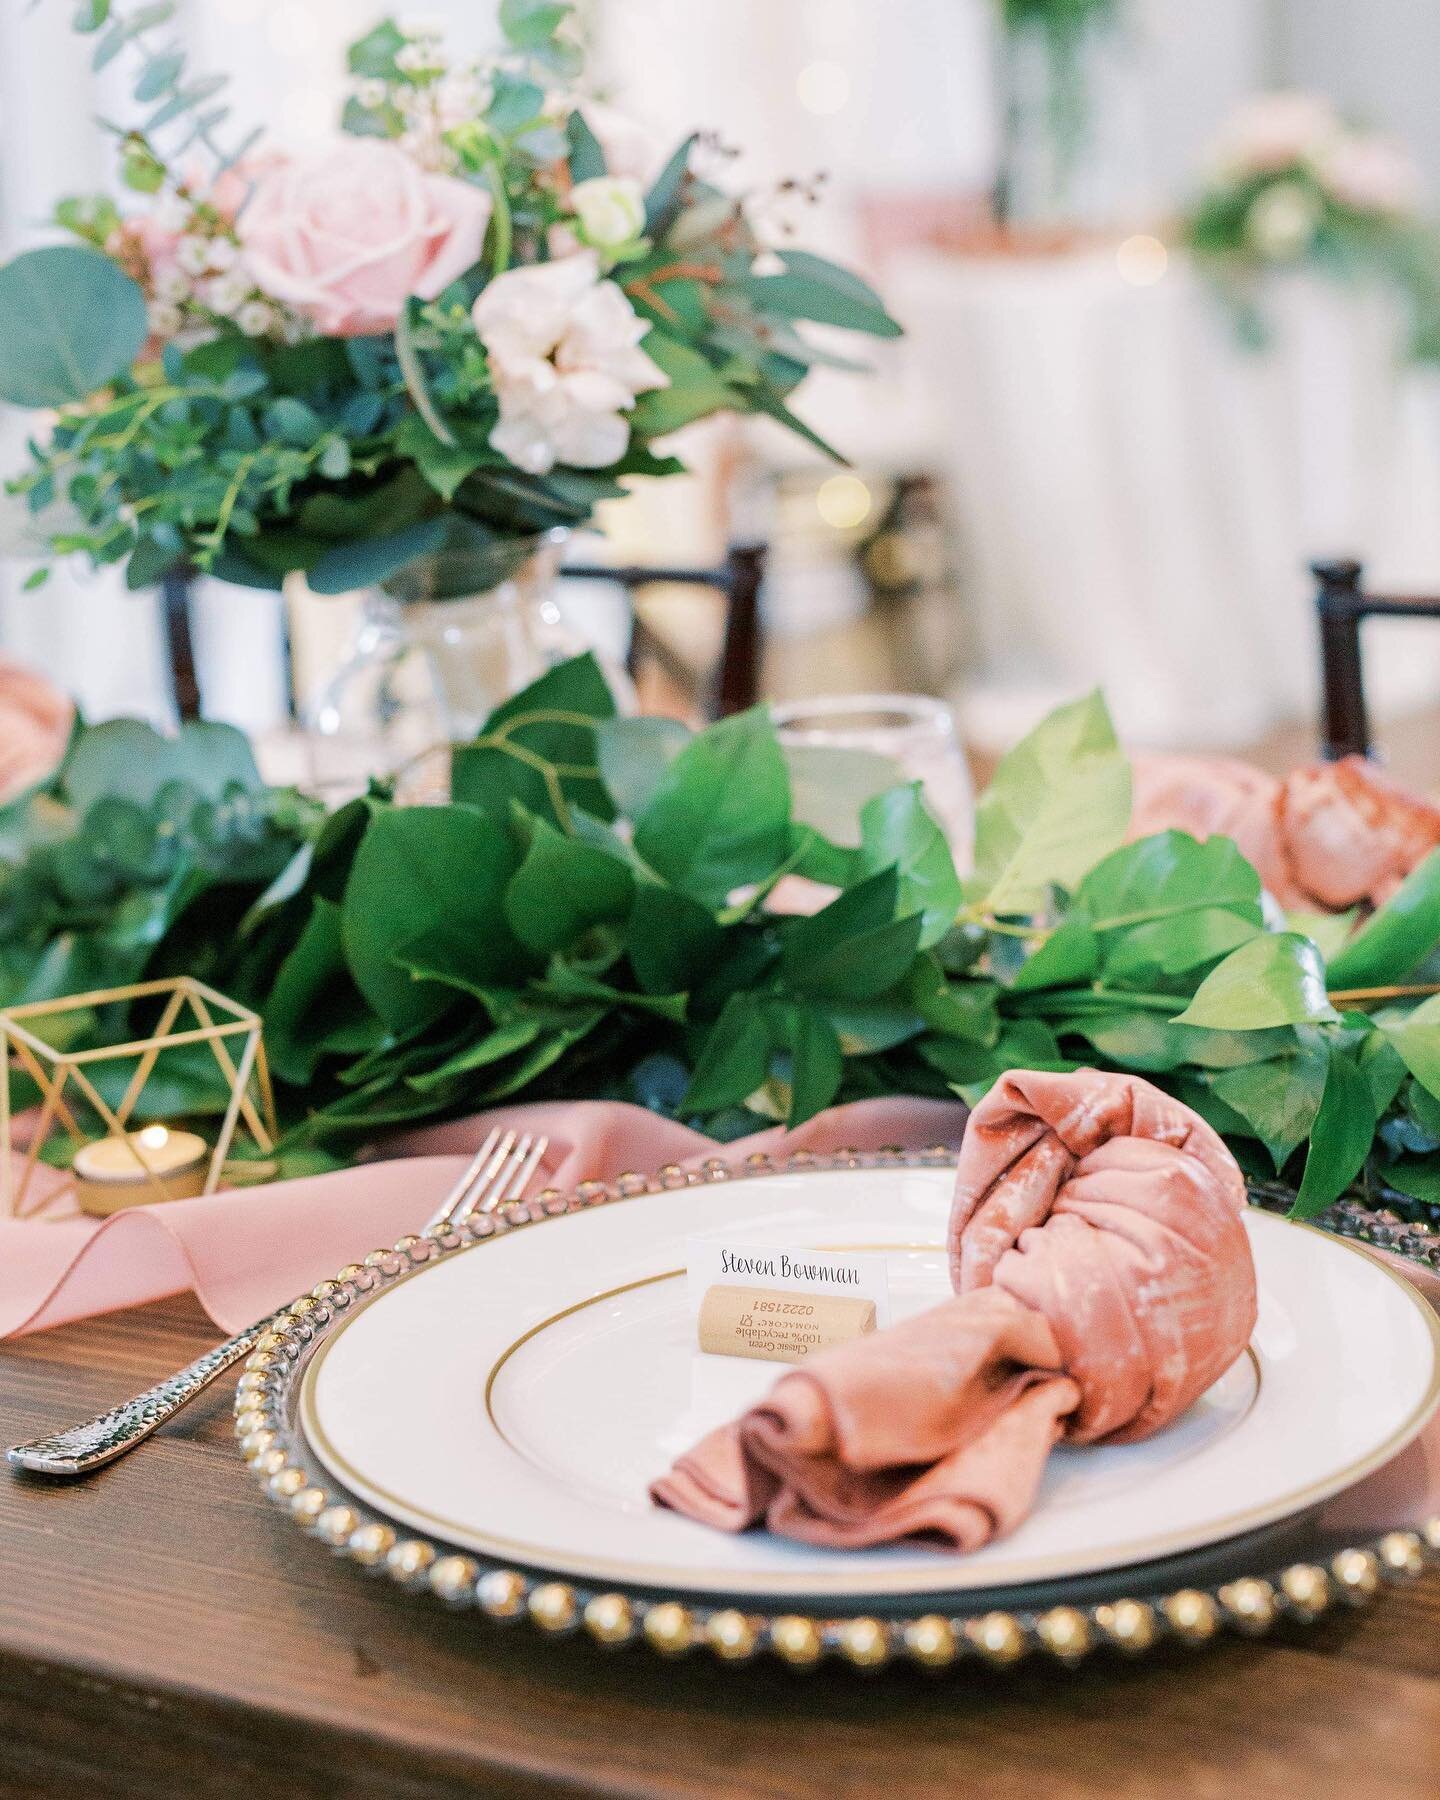 Classy, sassy + coral. Not sure what we love more, classic gold, wood chargers, or crushed velvet napkins. What&rsquo;s your pick? 📸 @corrinjasinski 
.
.
.

#thehistoricpostoffice #hrvaweddings #hrvabrides #vaweddingvenue #vaweddings #weddingvenue #